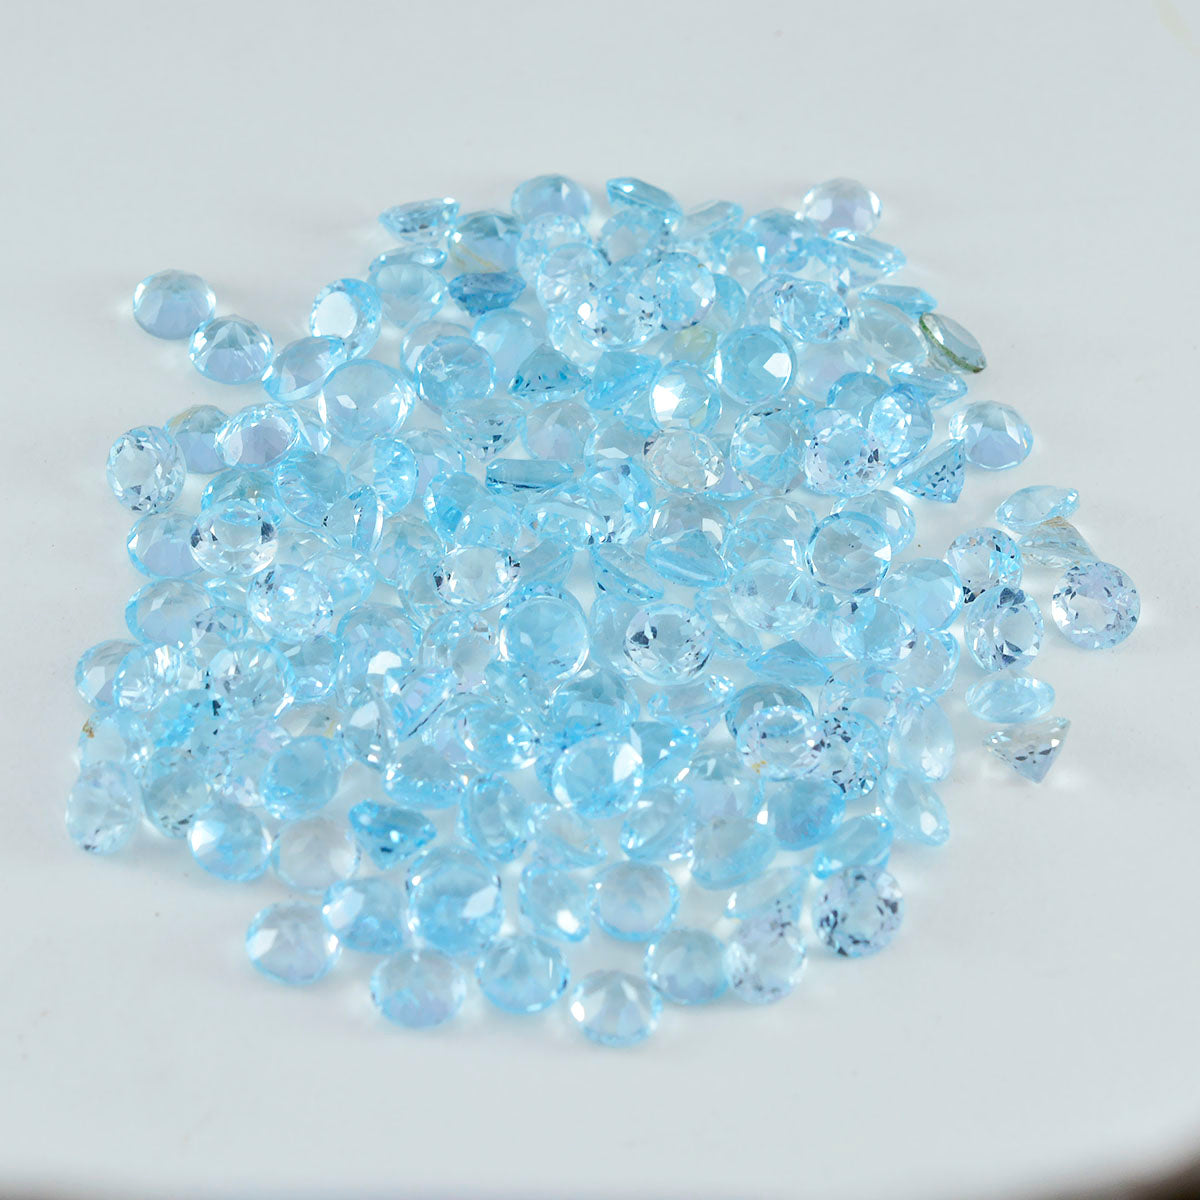 Riyogems, 1 pieza, Topacio azul Natural facetado, 4x4mm, forma redonda, gemas sueltas de calidad dulce